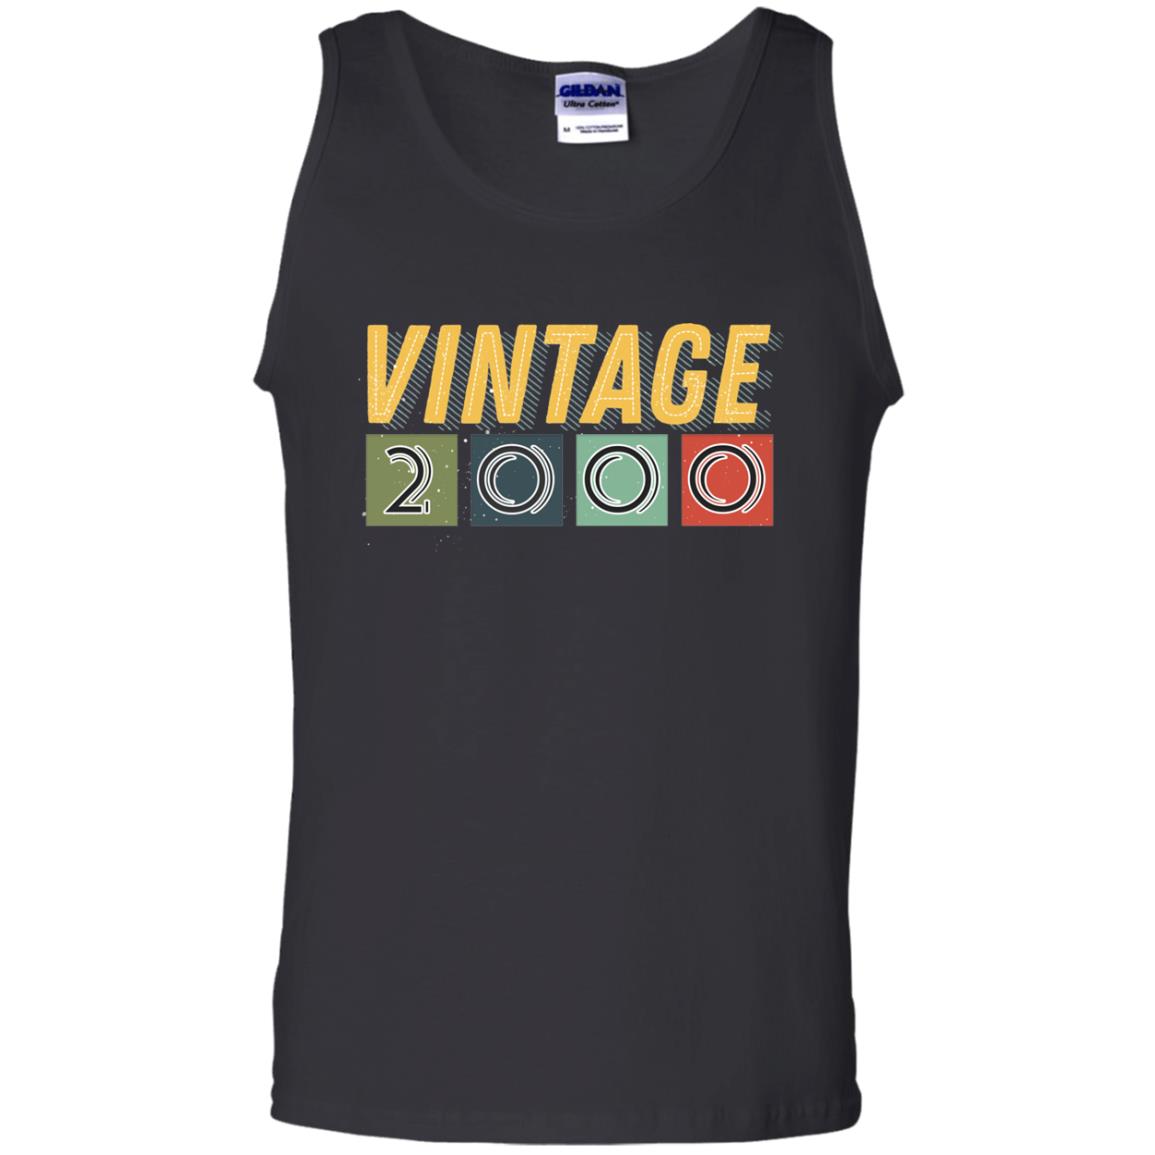 Vintage 2000 18th Birthday Gift Shirt For Mens Or WomensG220 Gildan 100% Cotton Tank Top